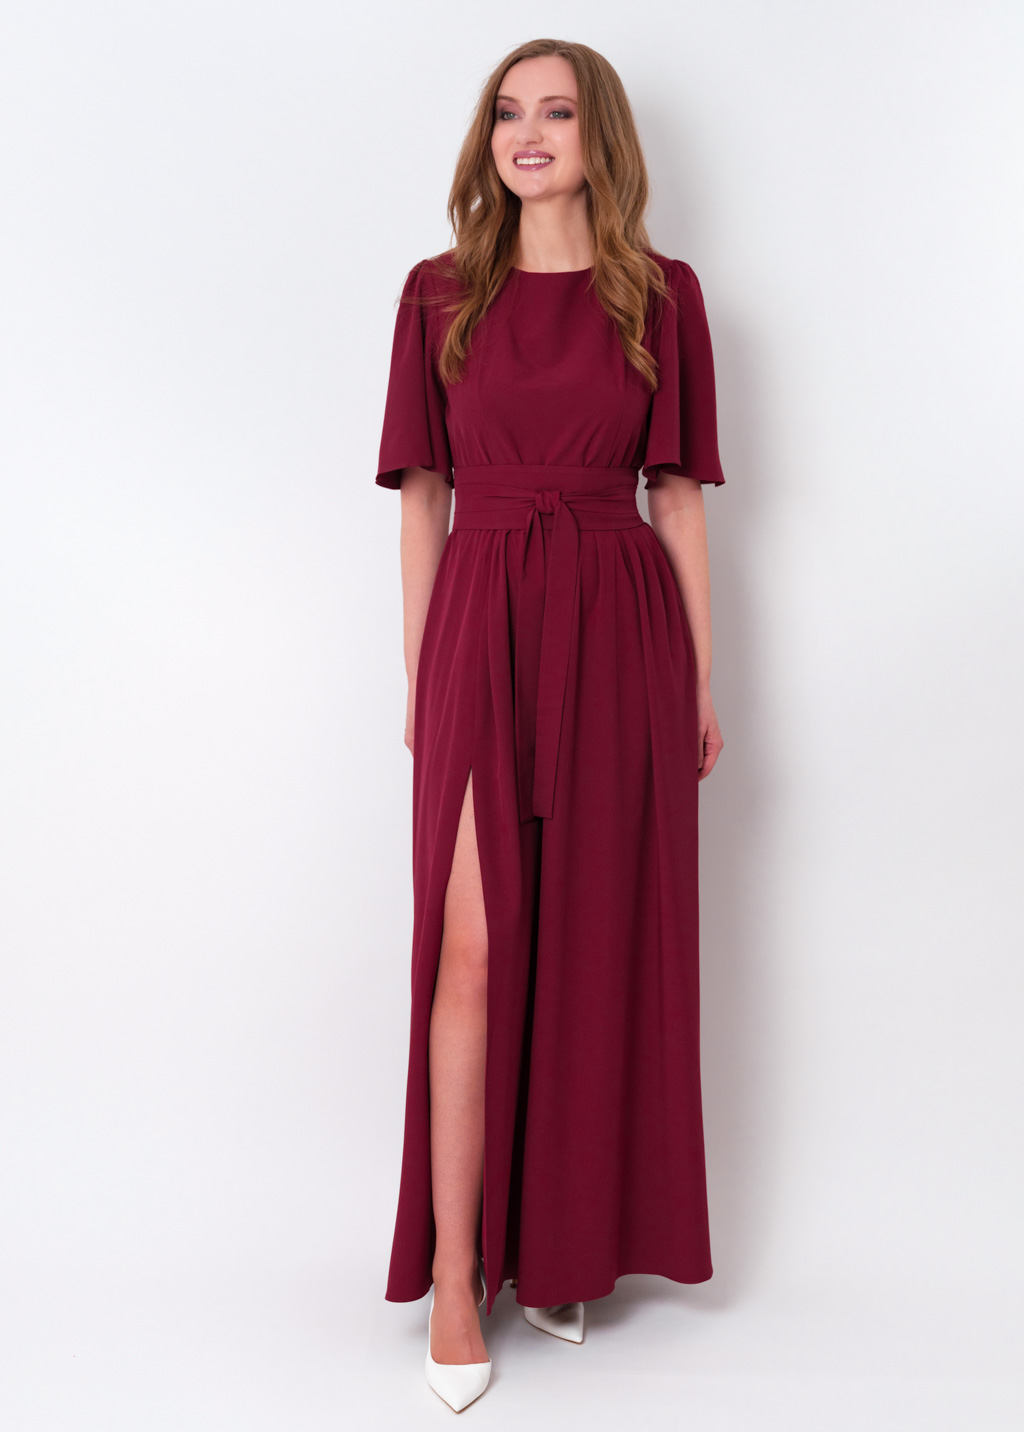 Burgundy long slit dress with belt